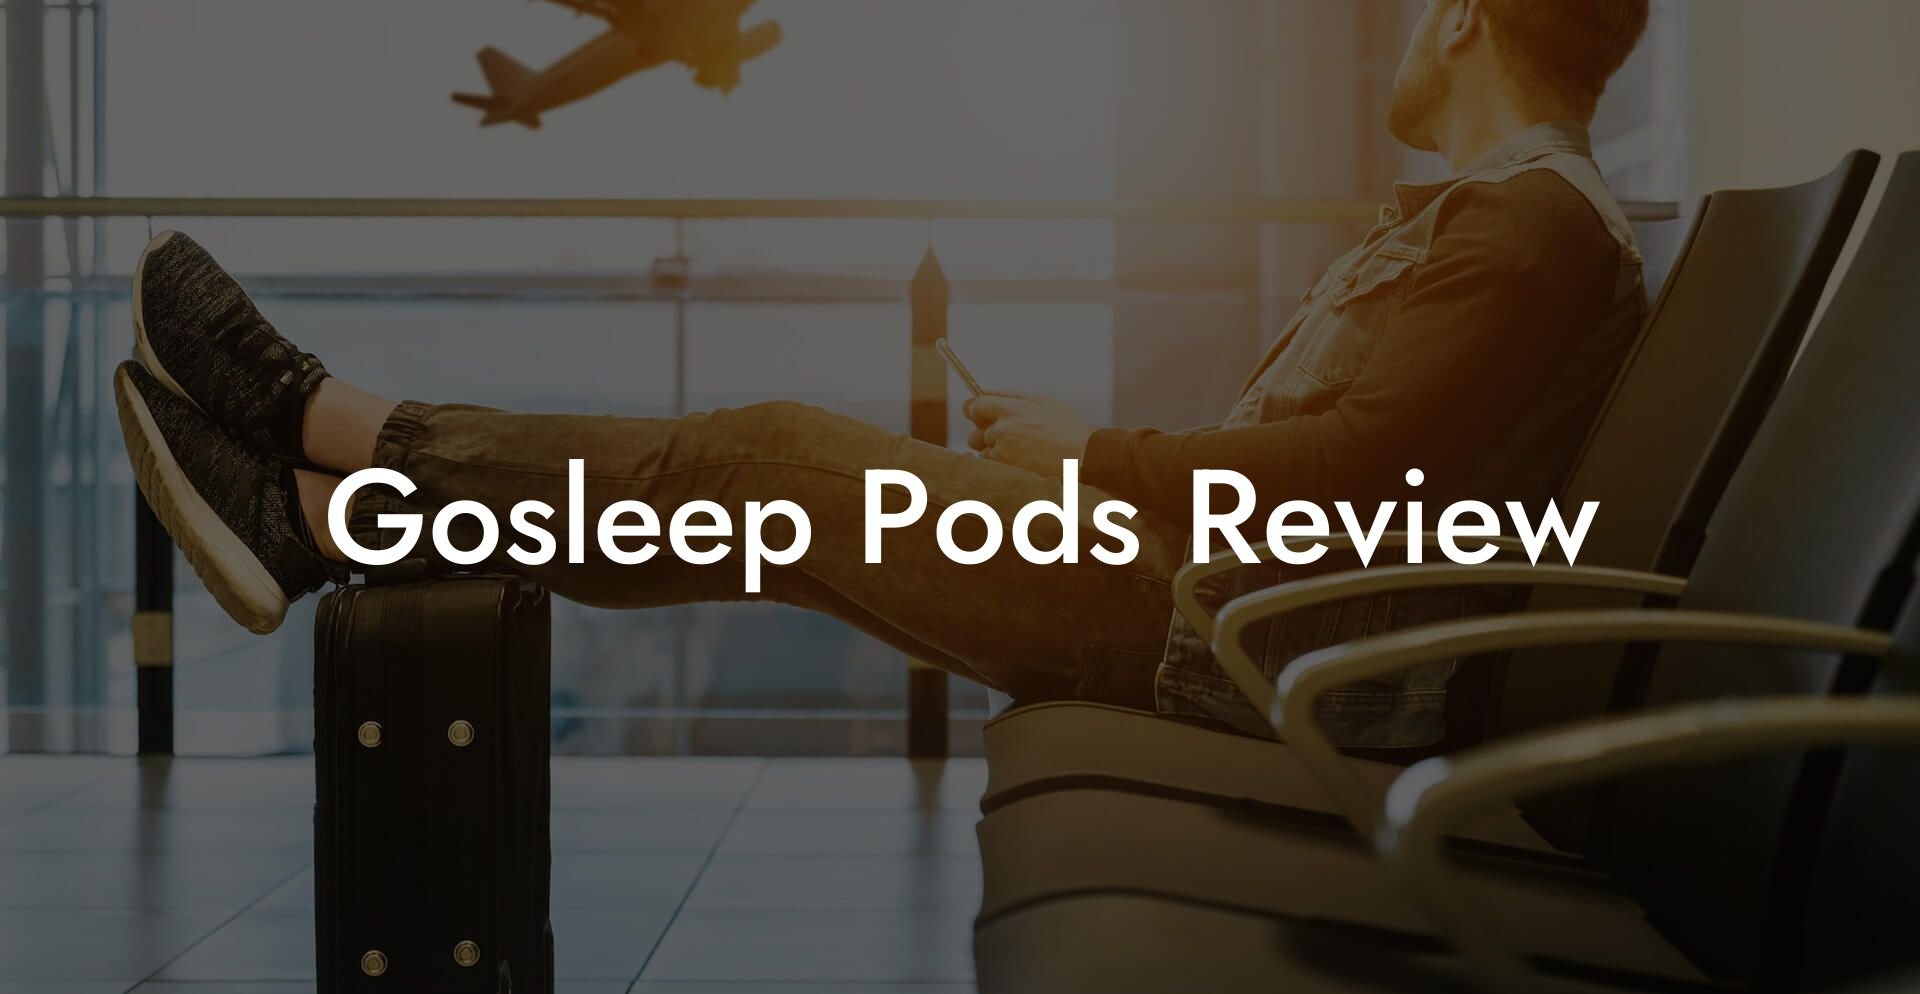 Gosleep Pods Review